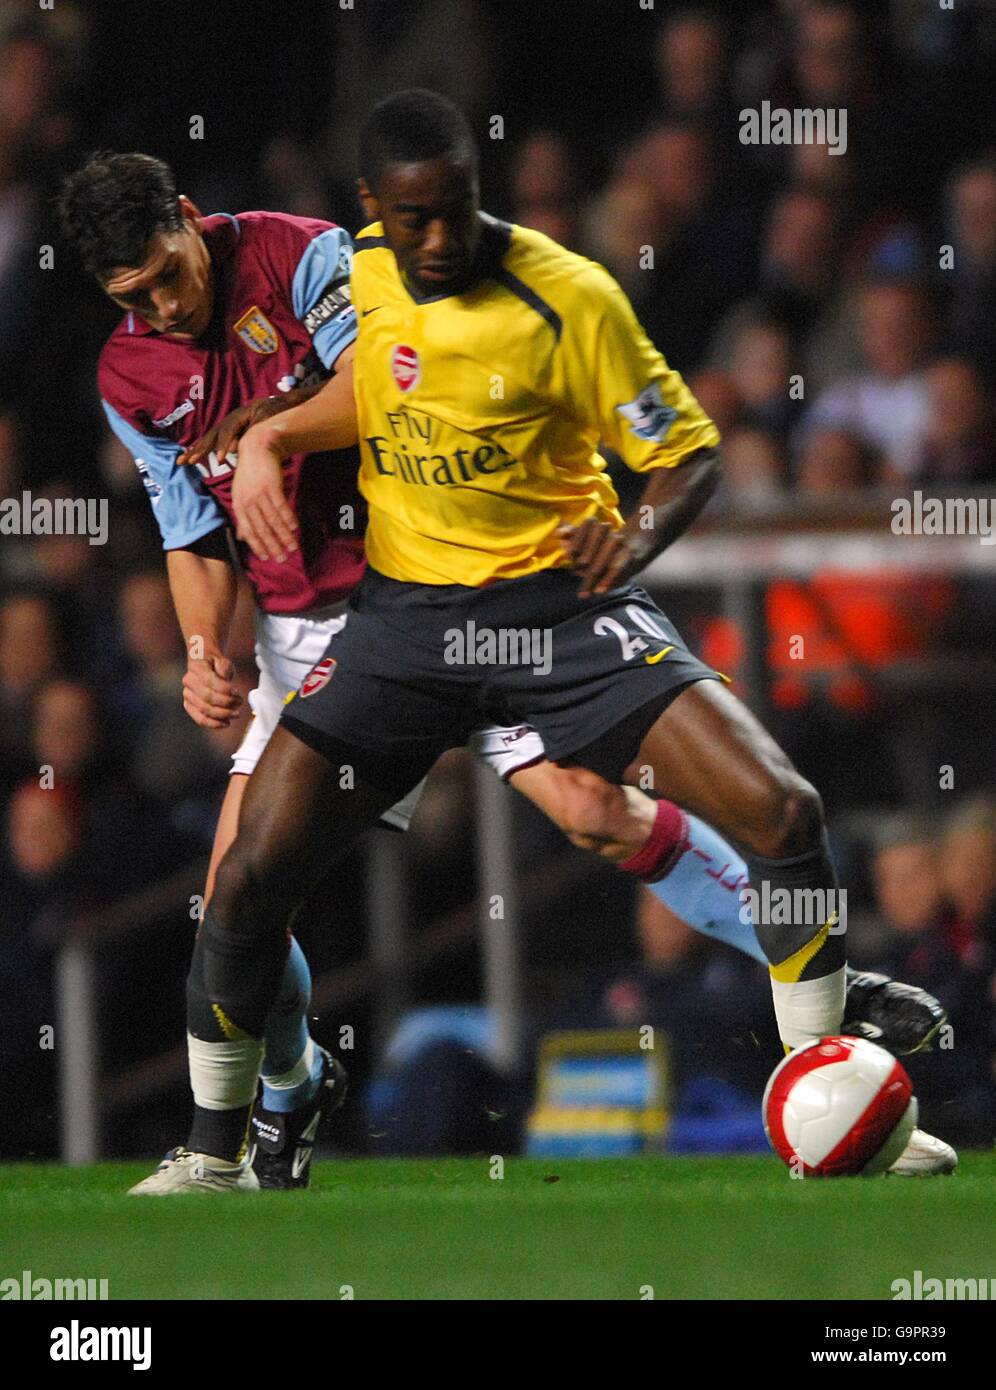 Soccer - FA Barclays Premiership - Aston Villa v Arsenal - Villa Park. Johan Djourou, Arsenal (r) and Gareth Barry, Aston Villa battle for the ball Stock Photo